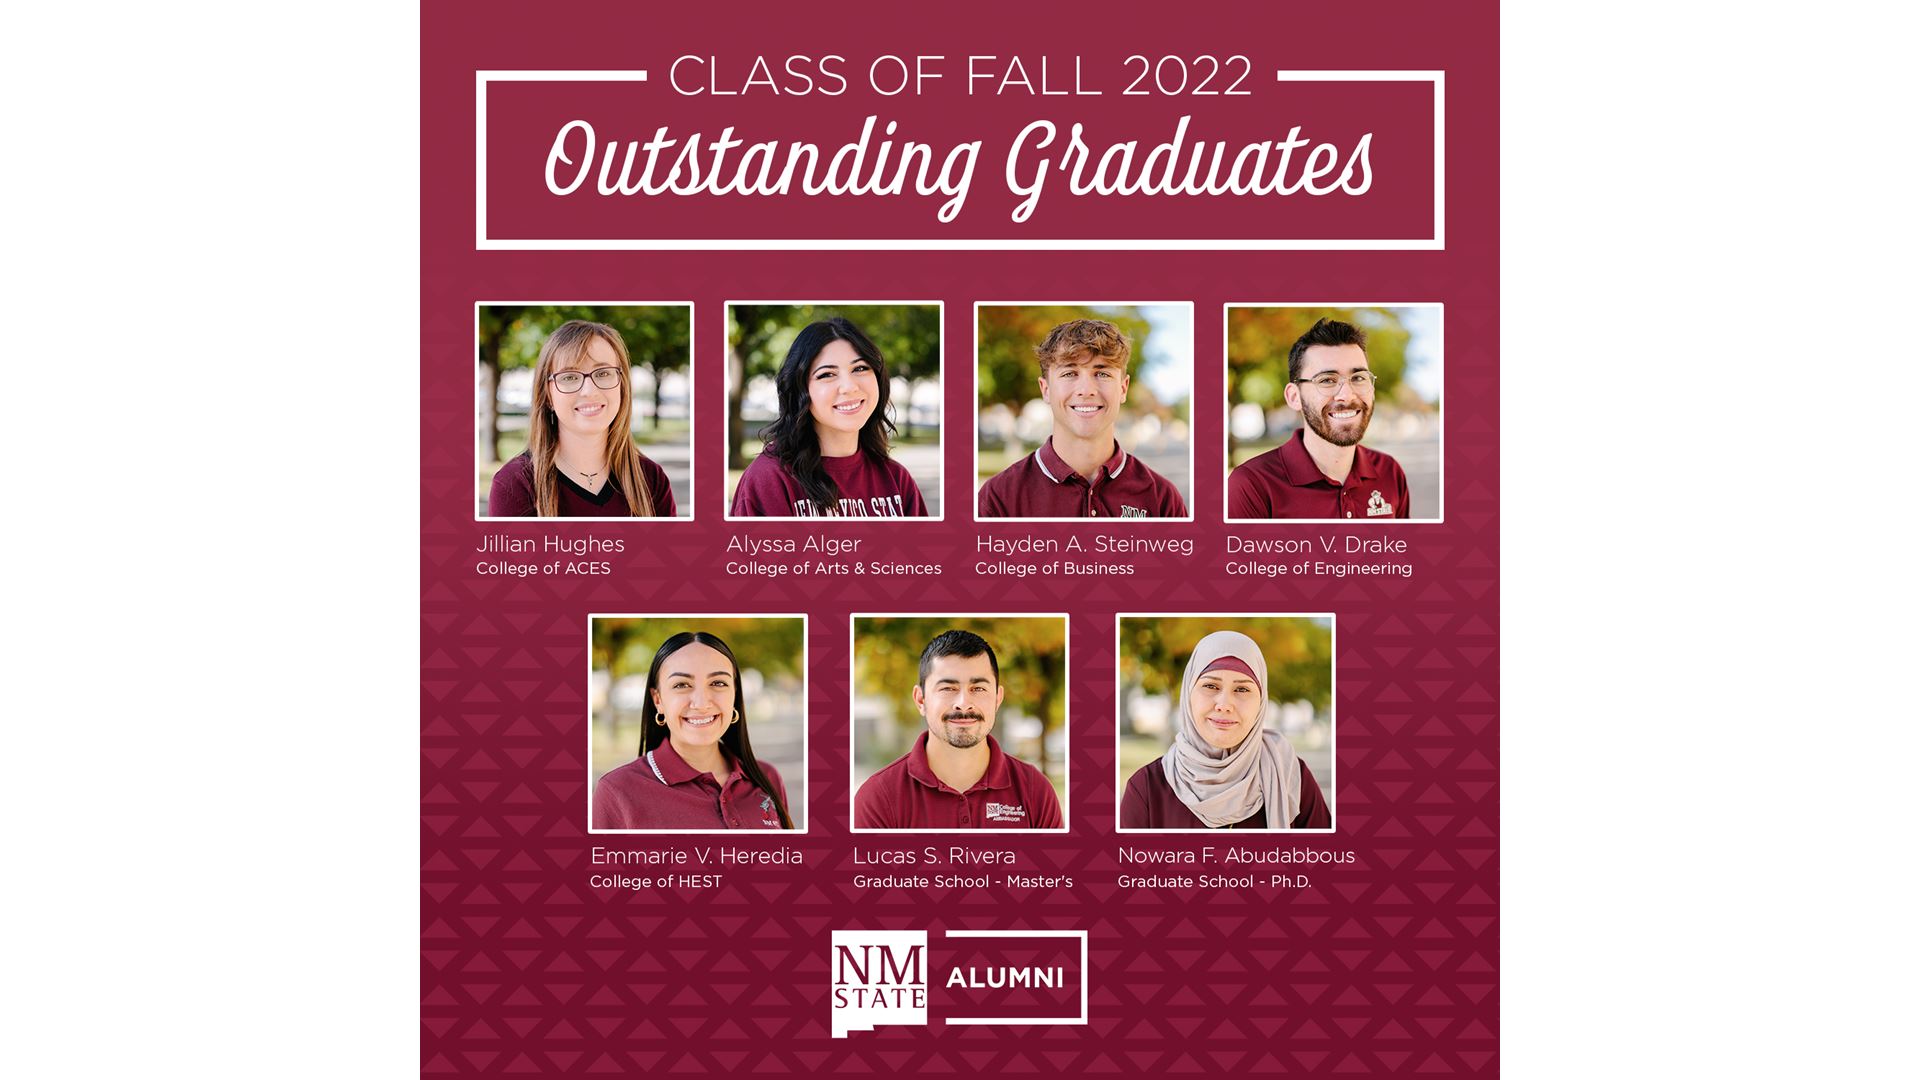 NMSU Outstanding Graduate Award winners epitomize diligence, generosity, collaboration